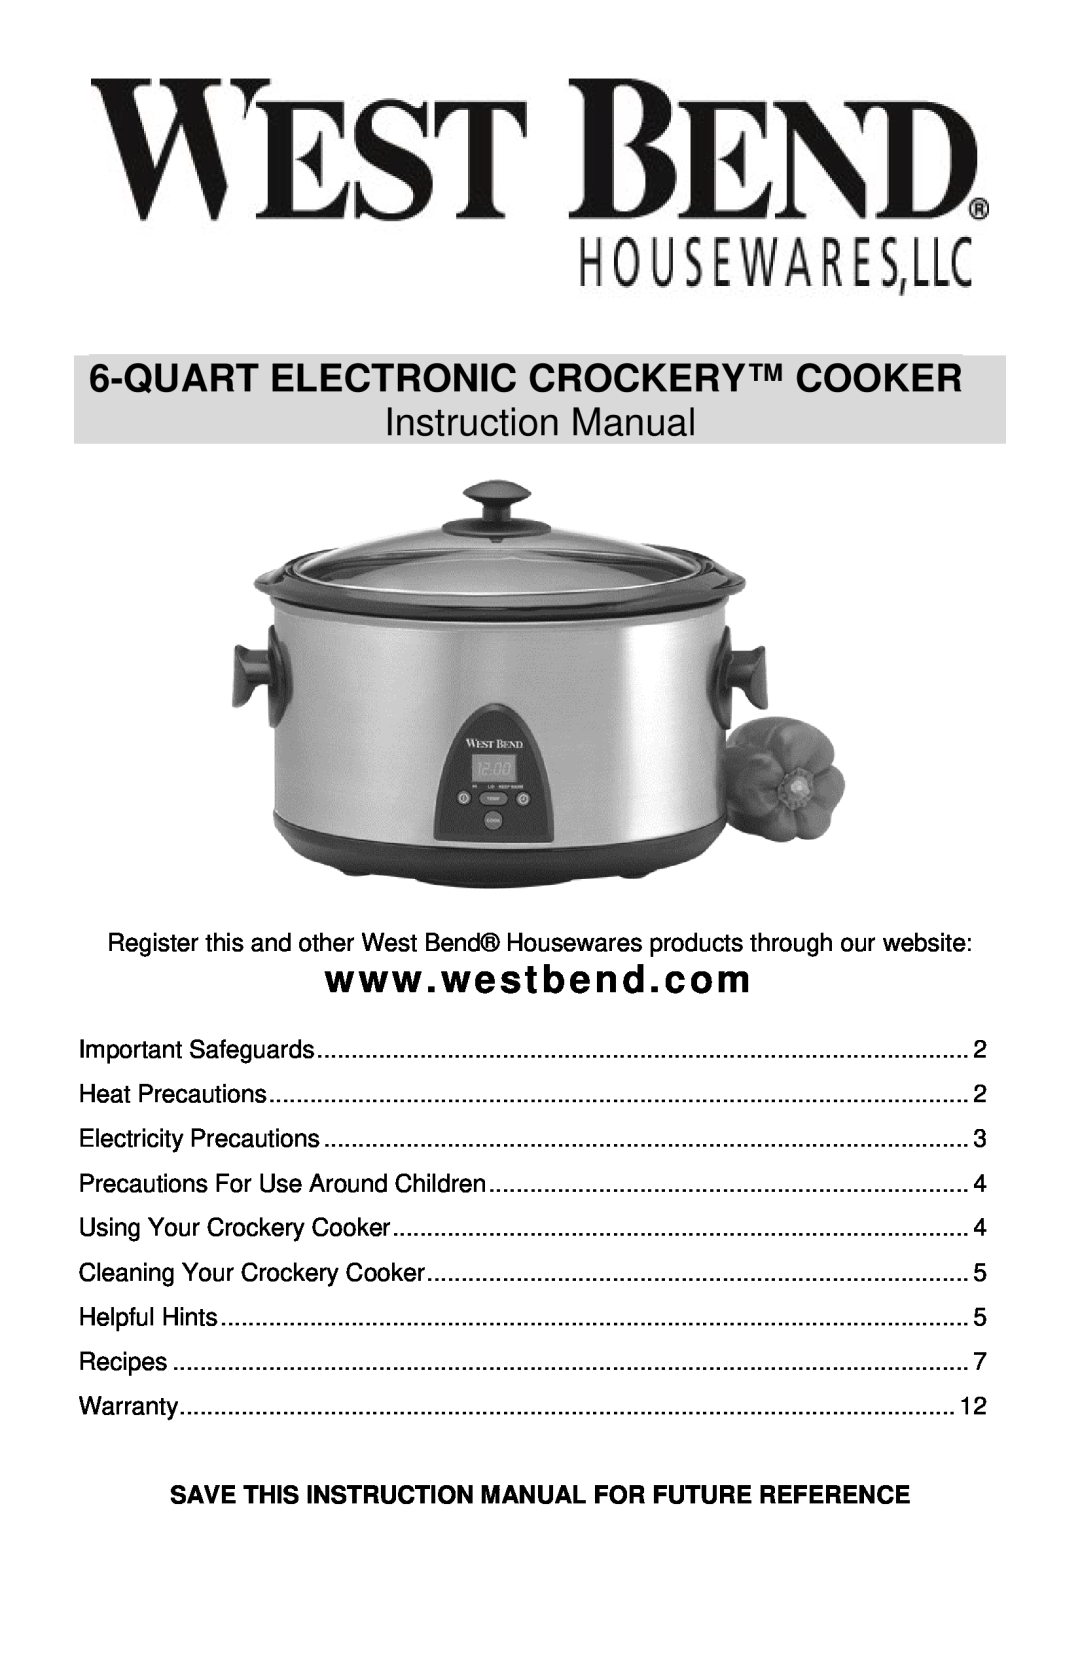 West Bend 6-QUART ELECTRONIC CROCKERYTM COOKER instruction manual Quart Electronic Crockery Cooker 